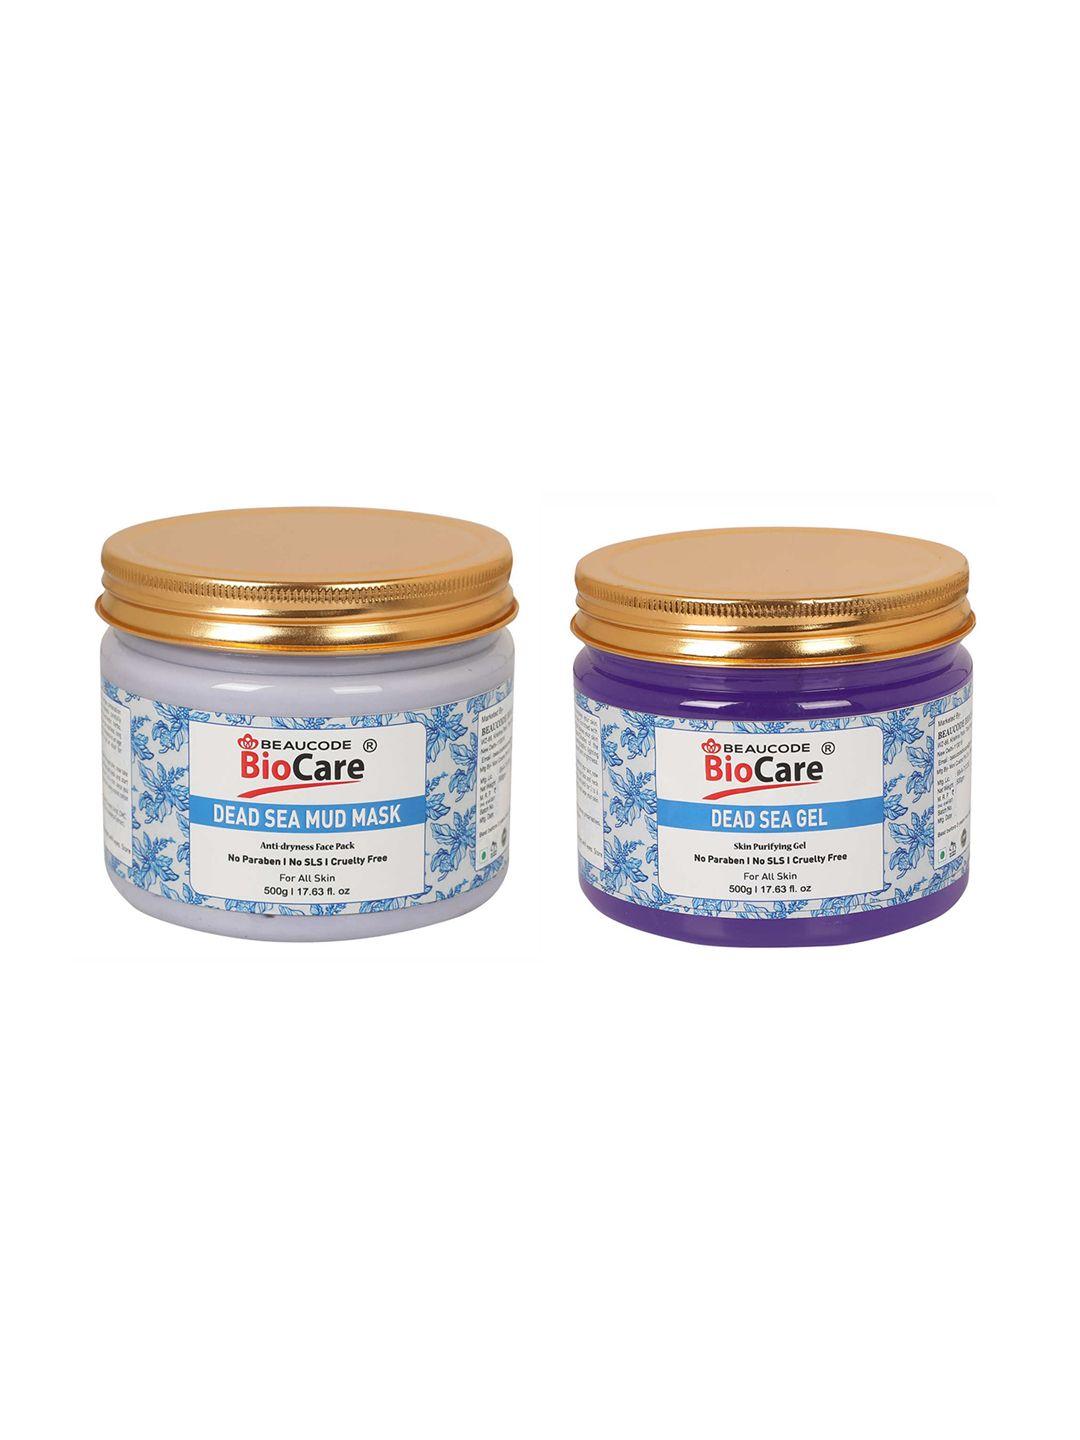 beaucode biocare blue set of 2 dead sea mud mask & gel - 500 g each